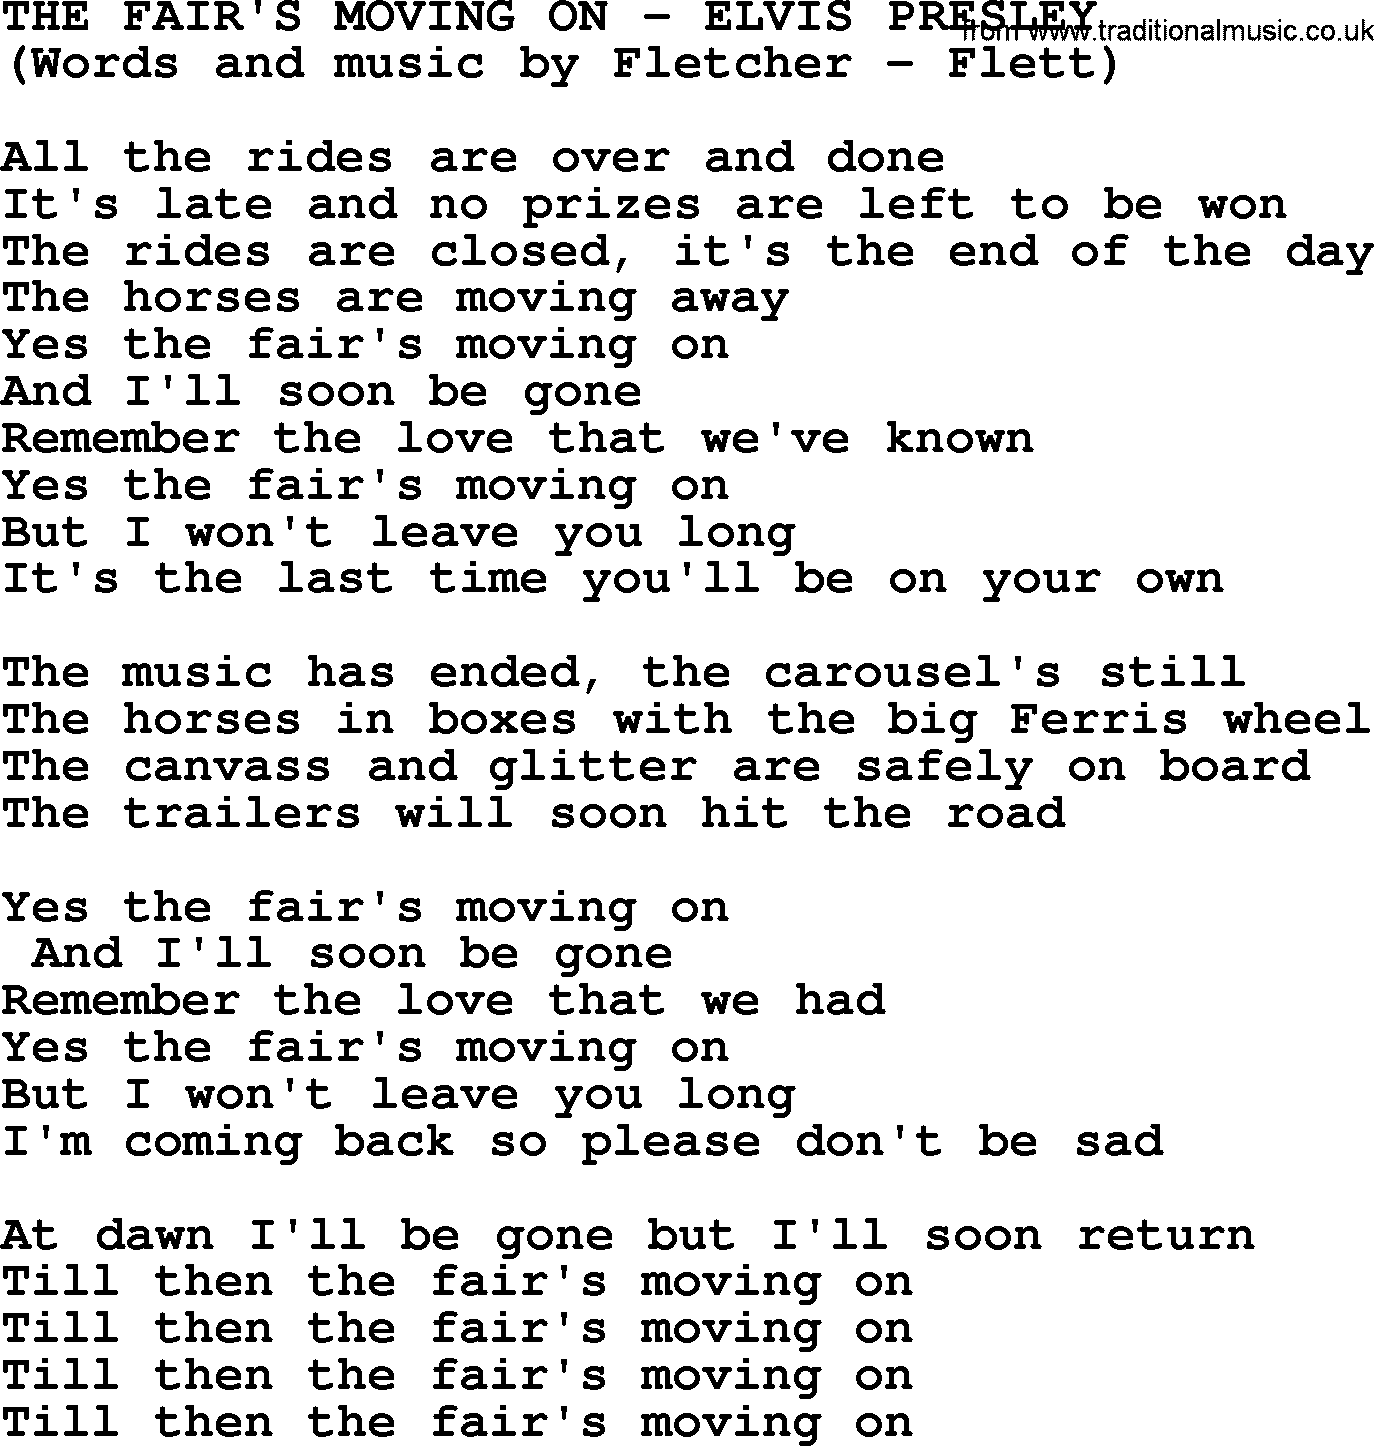 Elvis Presley song: The Fair's Moving On lyrics